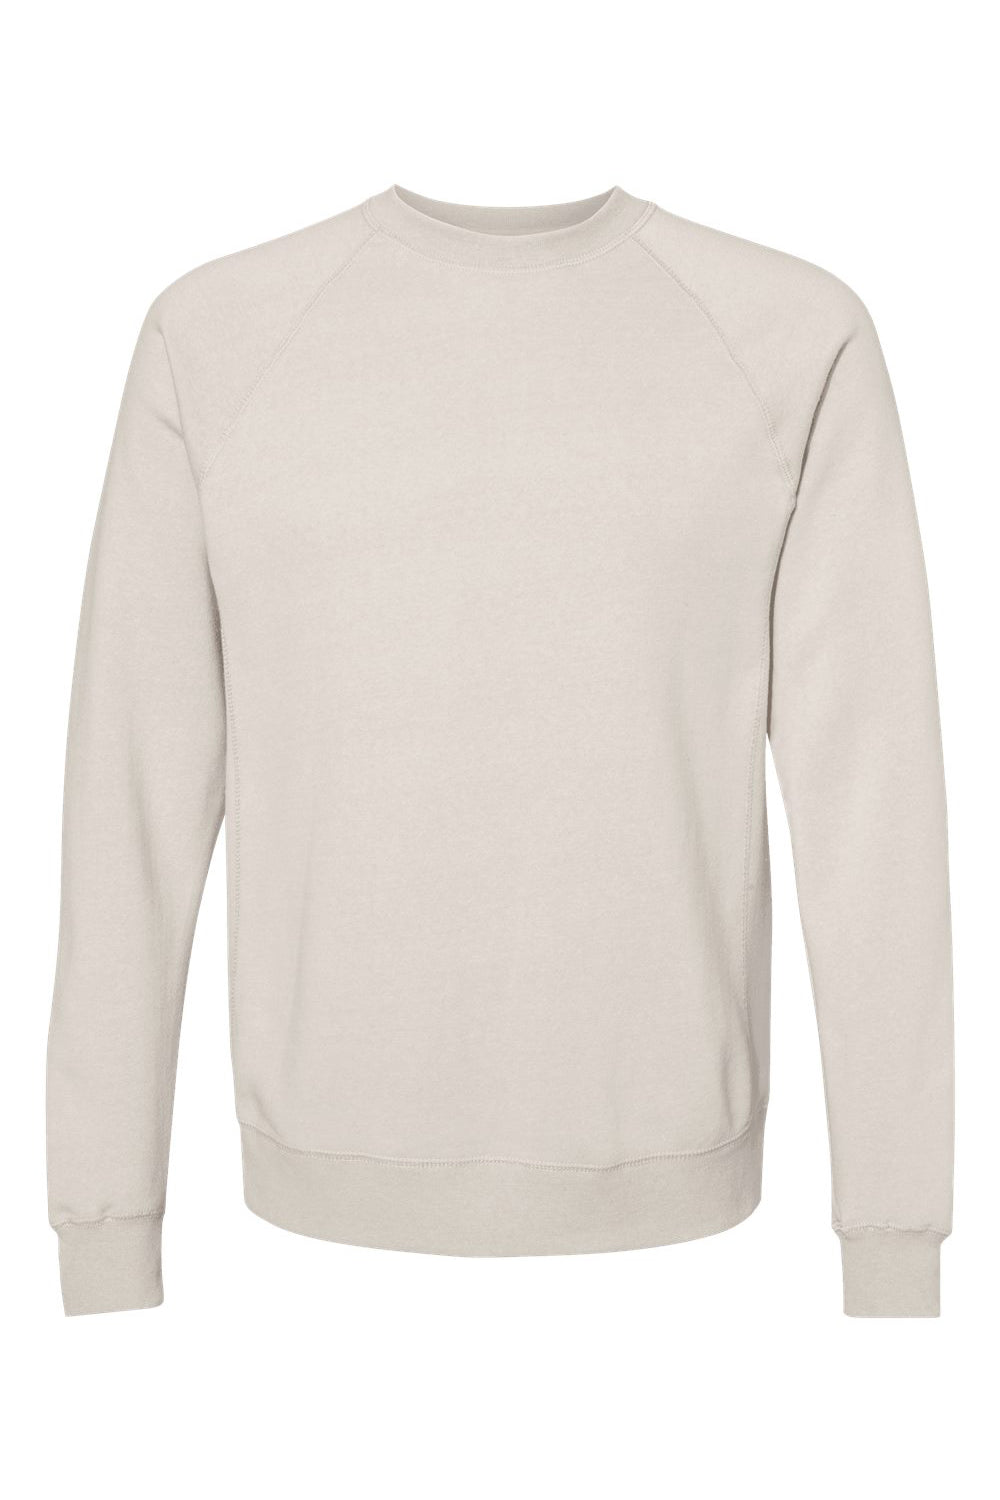 Independent Trading Co. PRM30SBC Mens Special Blend Crewneck Raglan Sweatshirt Heather Stone Flat Front